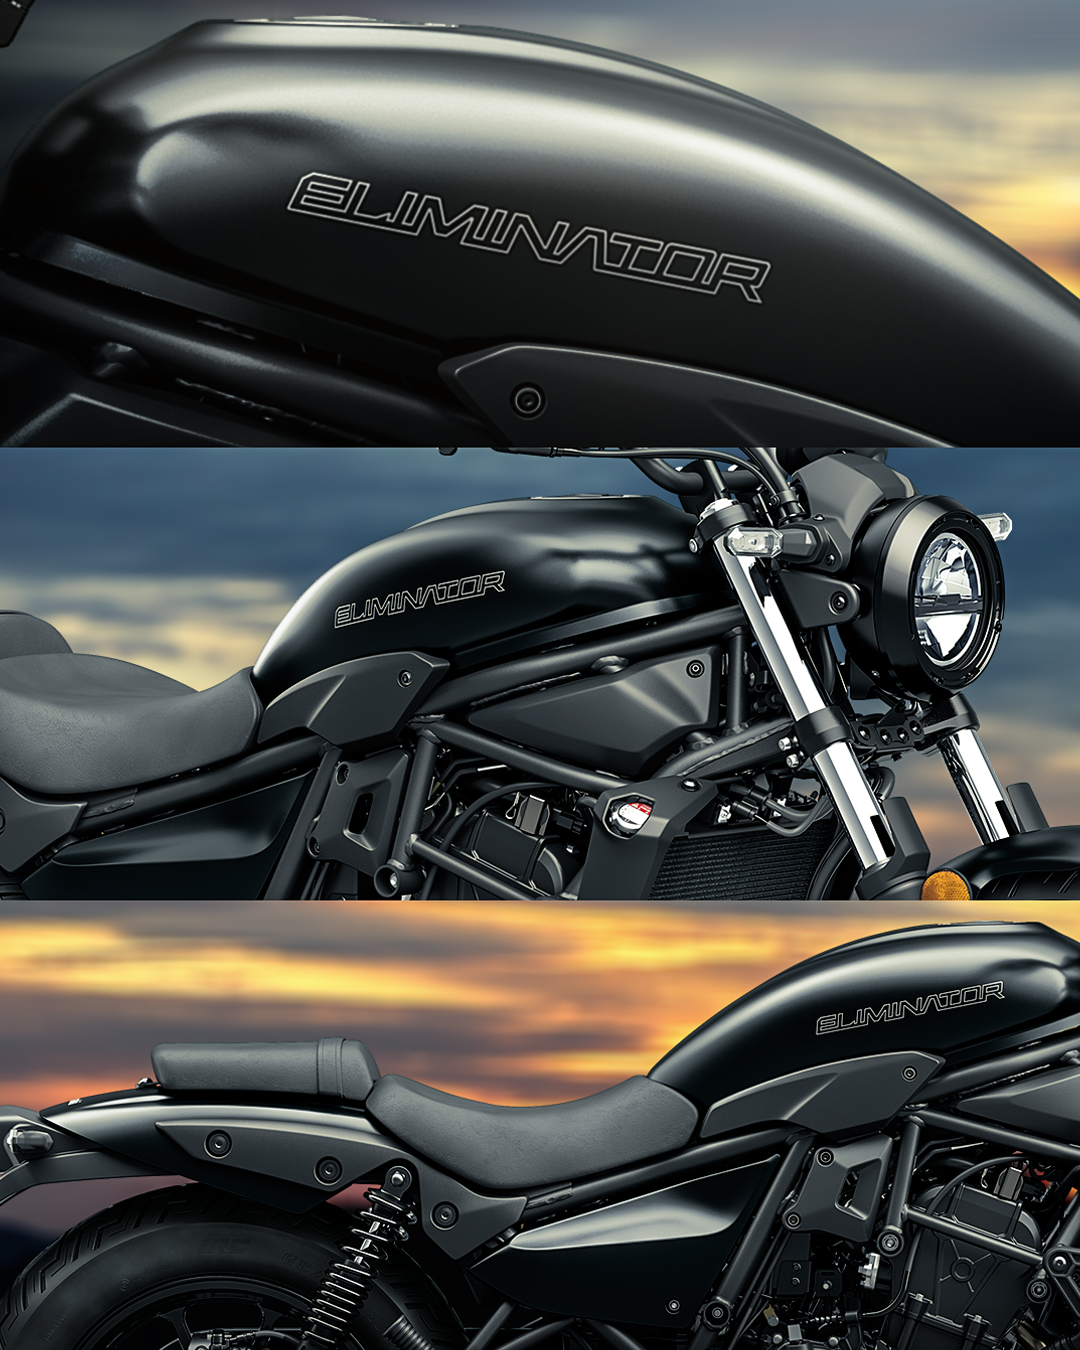 Kawasaki Eliminator 2024 A2 Motorcycle first images